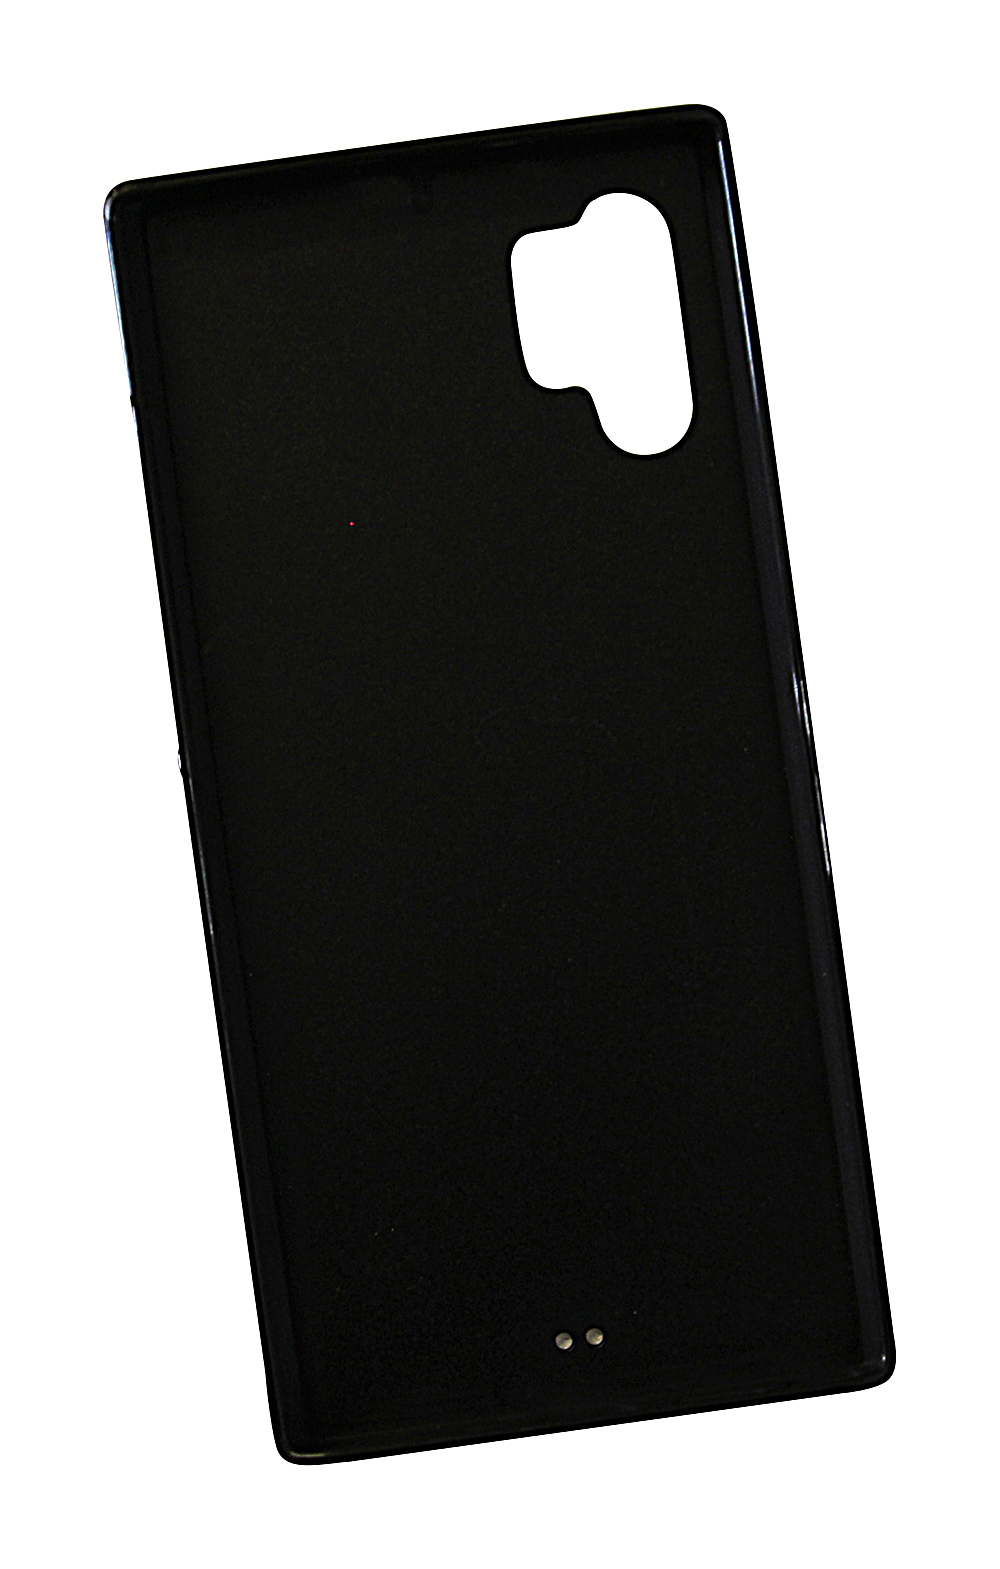 Skimblocker XL Magnet Wallet Samsung Galaxy Note 10 Plus (N975F/DS)